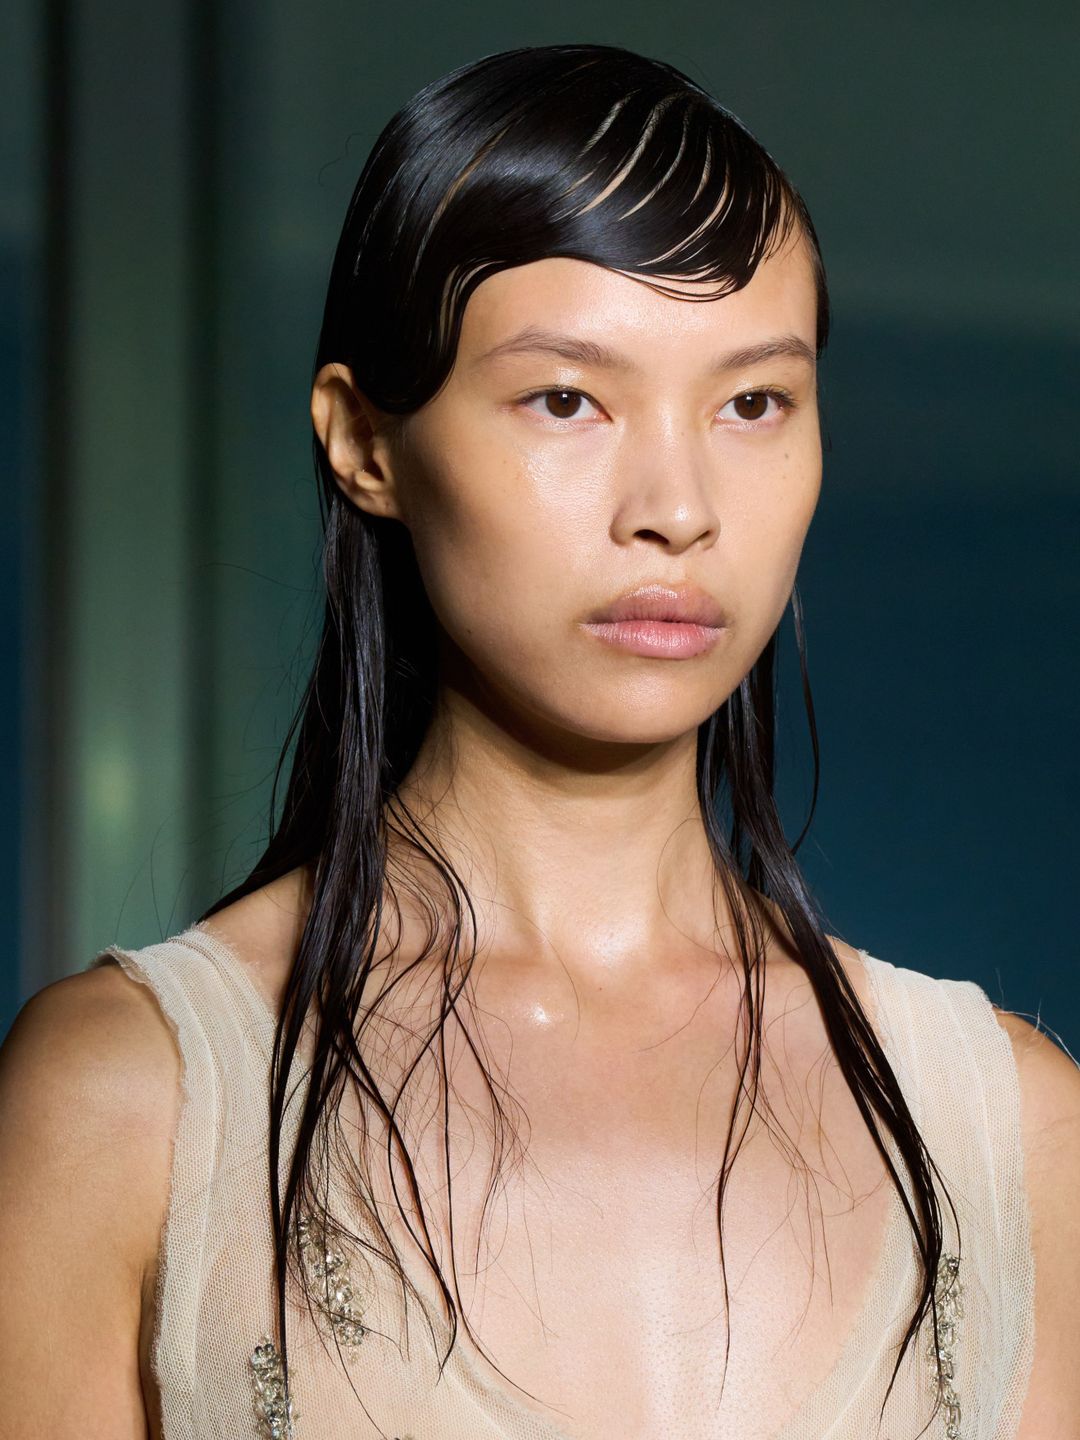 Model with wet-look hair at Jason Wu runway 